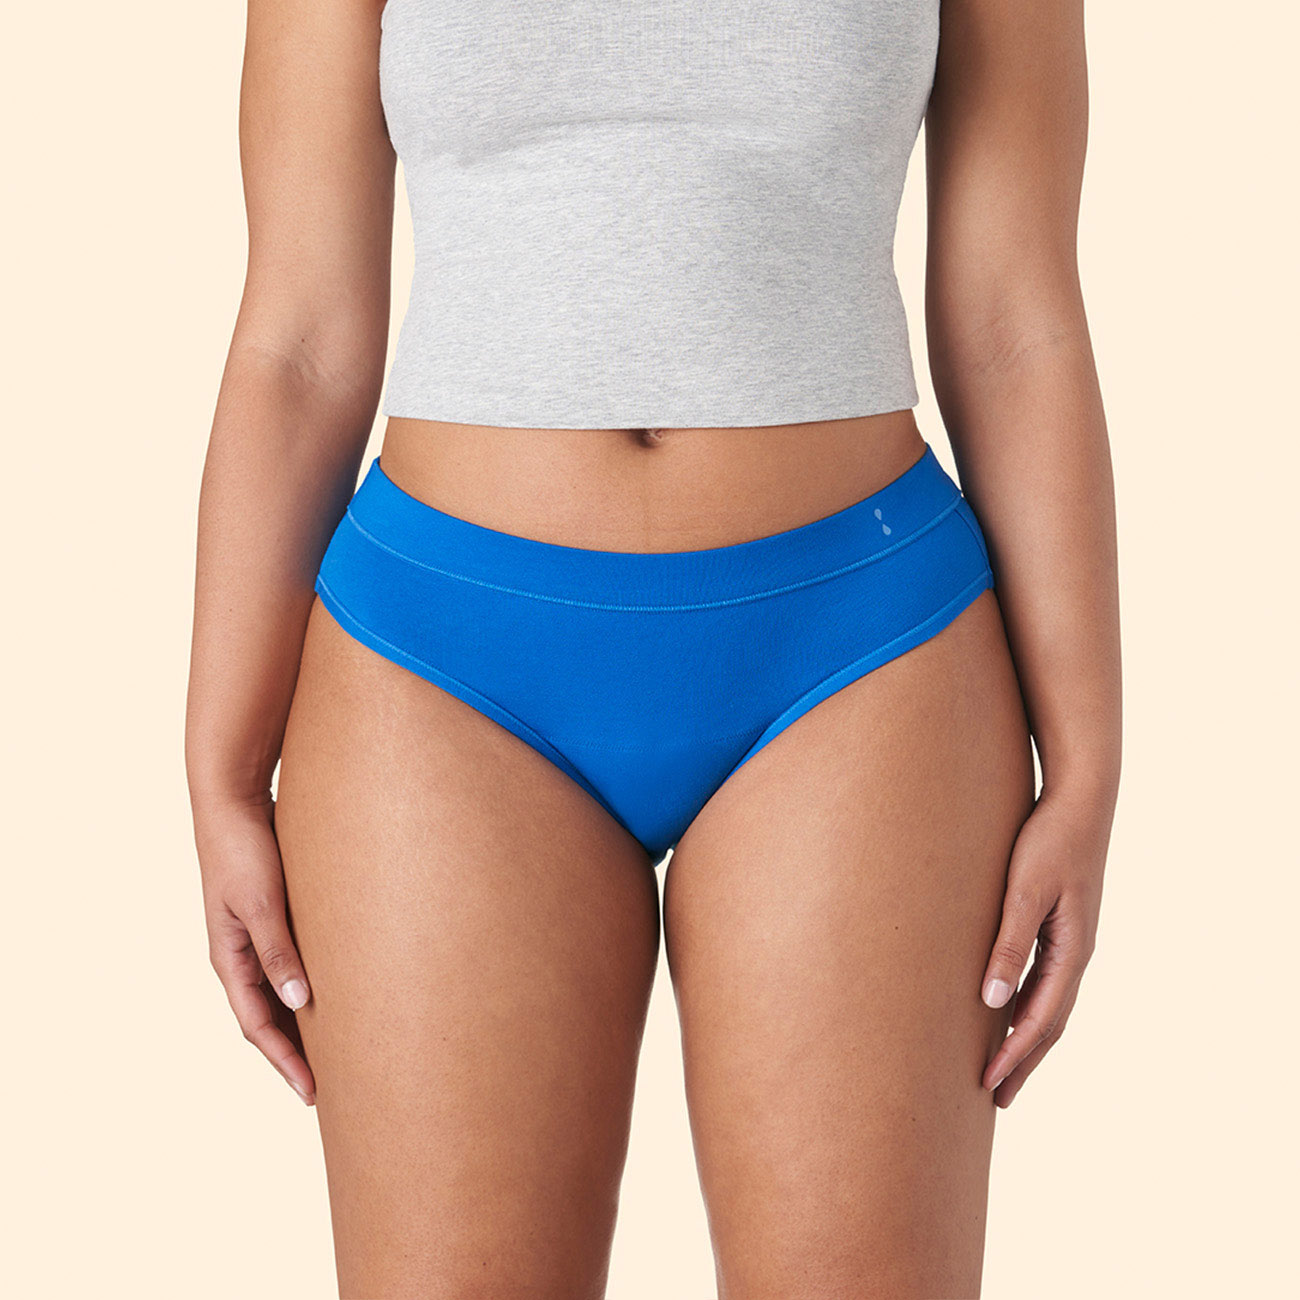 Thinx Air Bikini, Period Underwear for Women, Light Absorbency